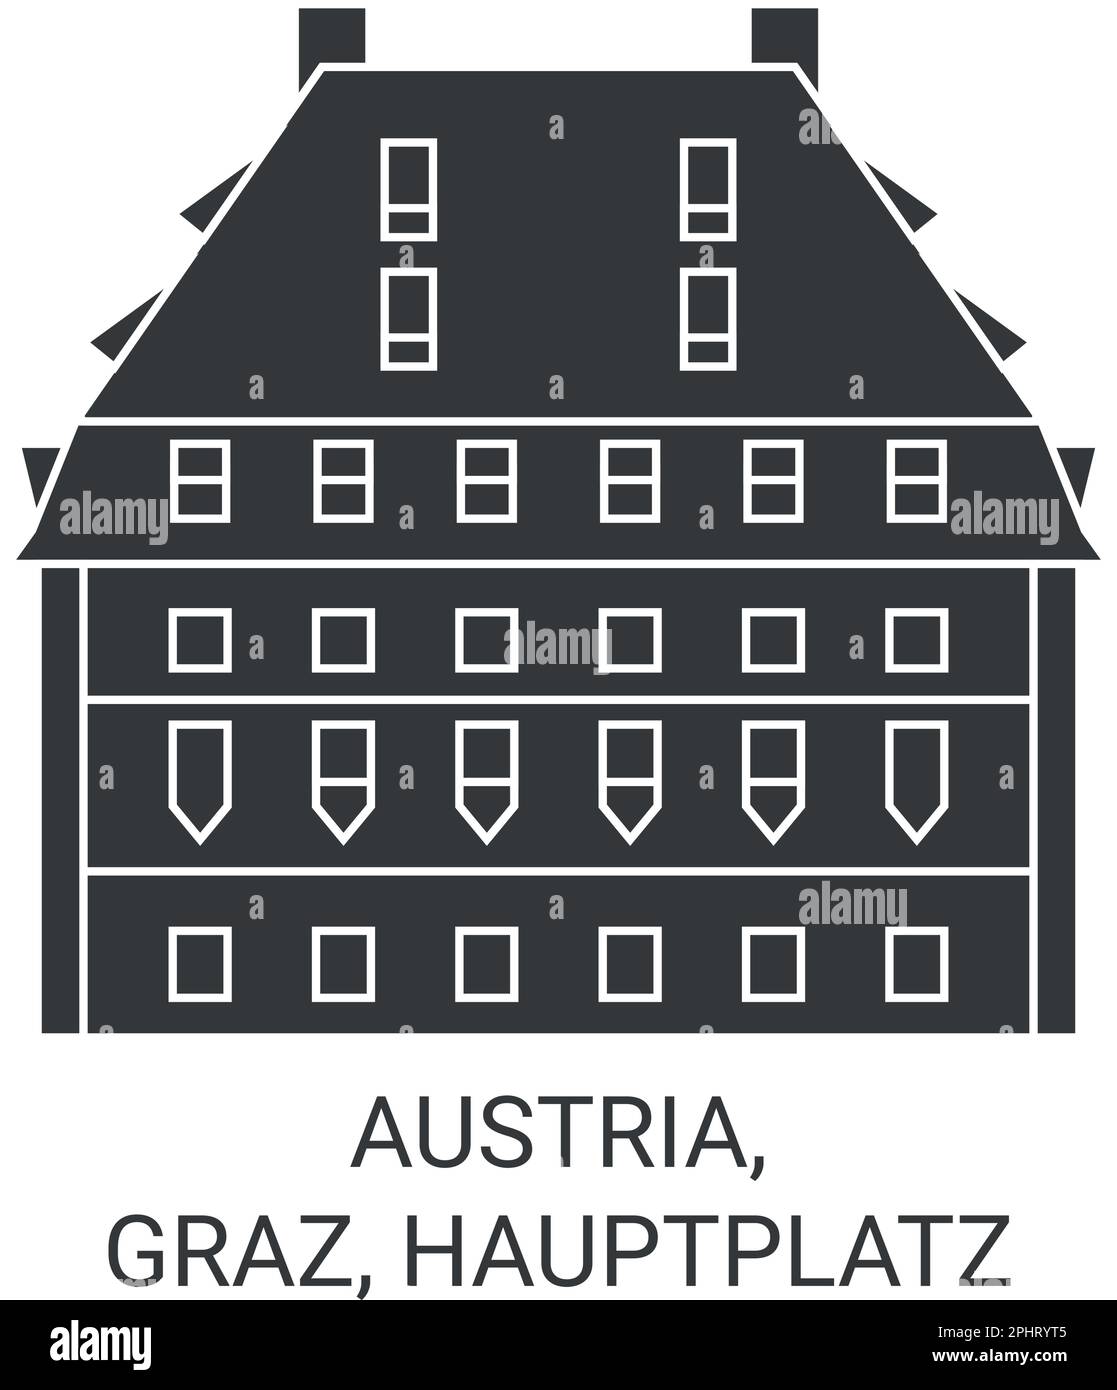 Austria, Graz, Hauptplatz travel landmark vector illustration Stock Vector